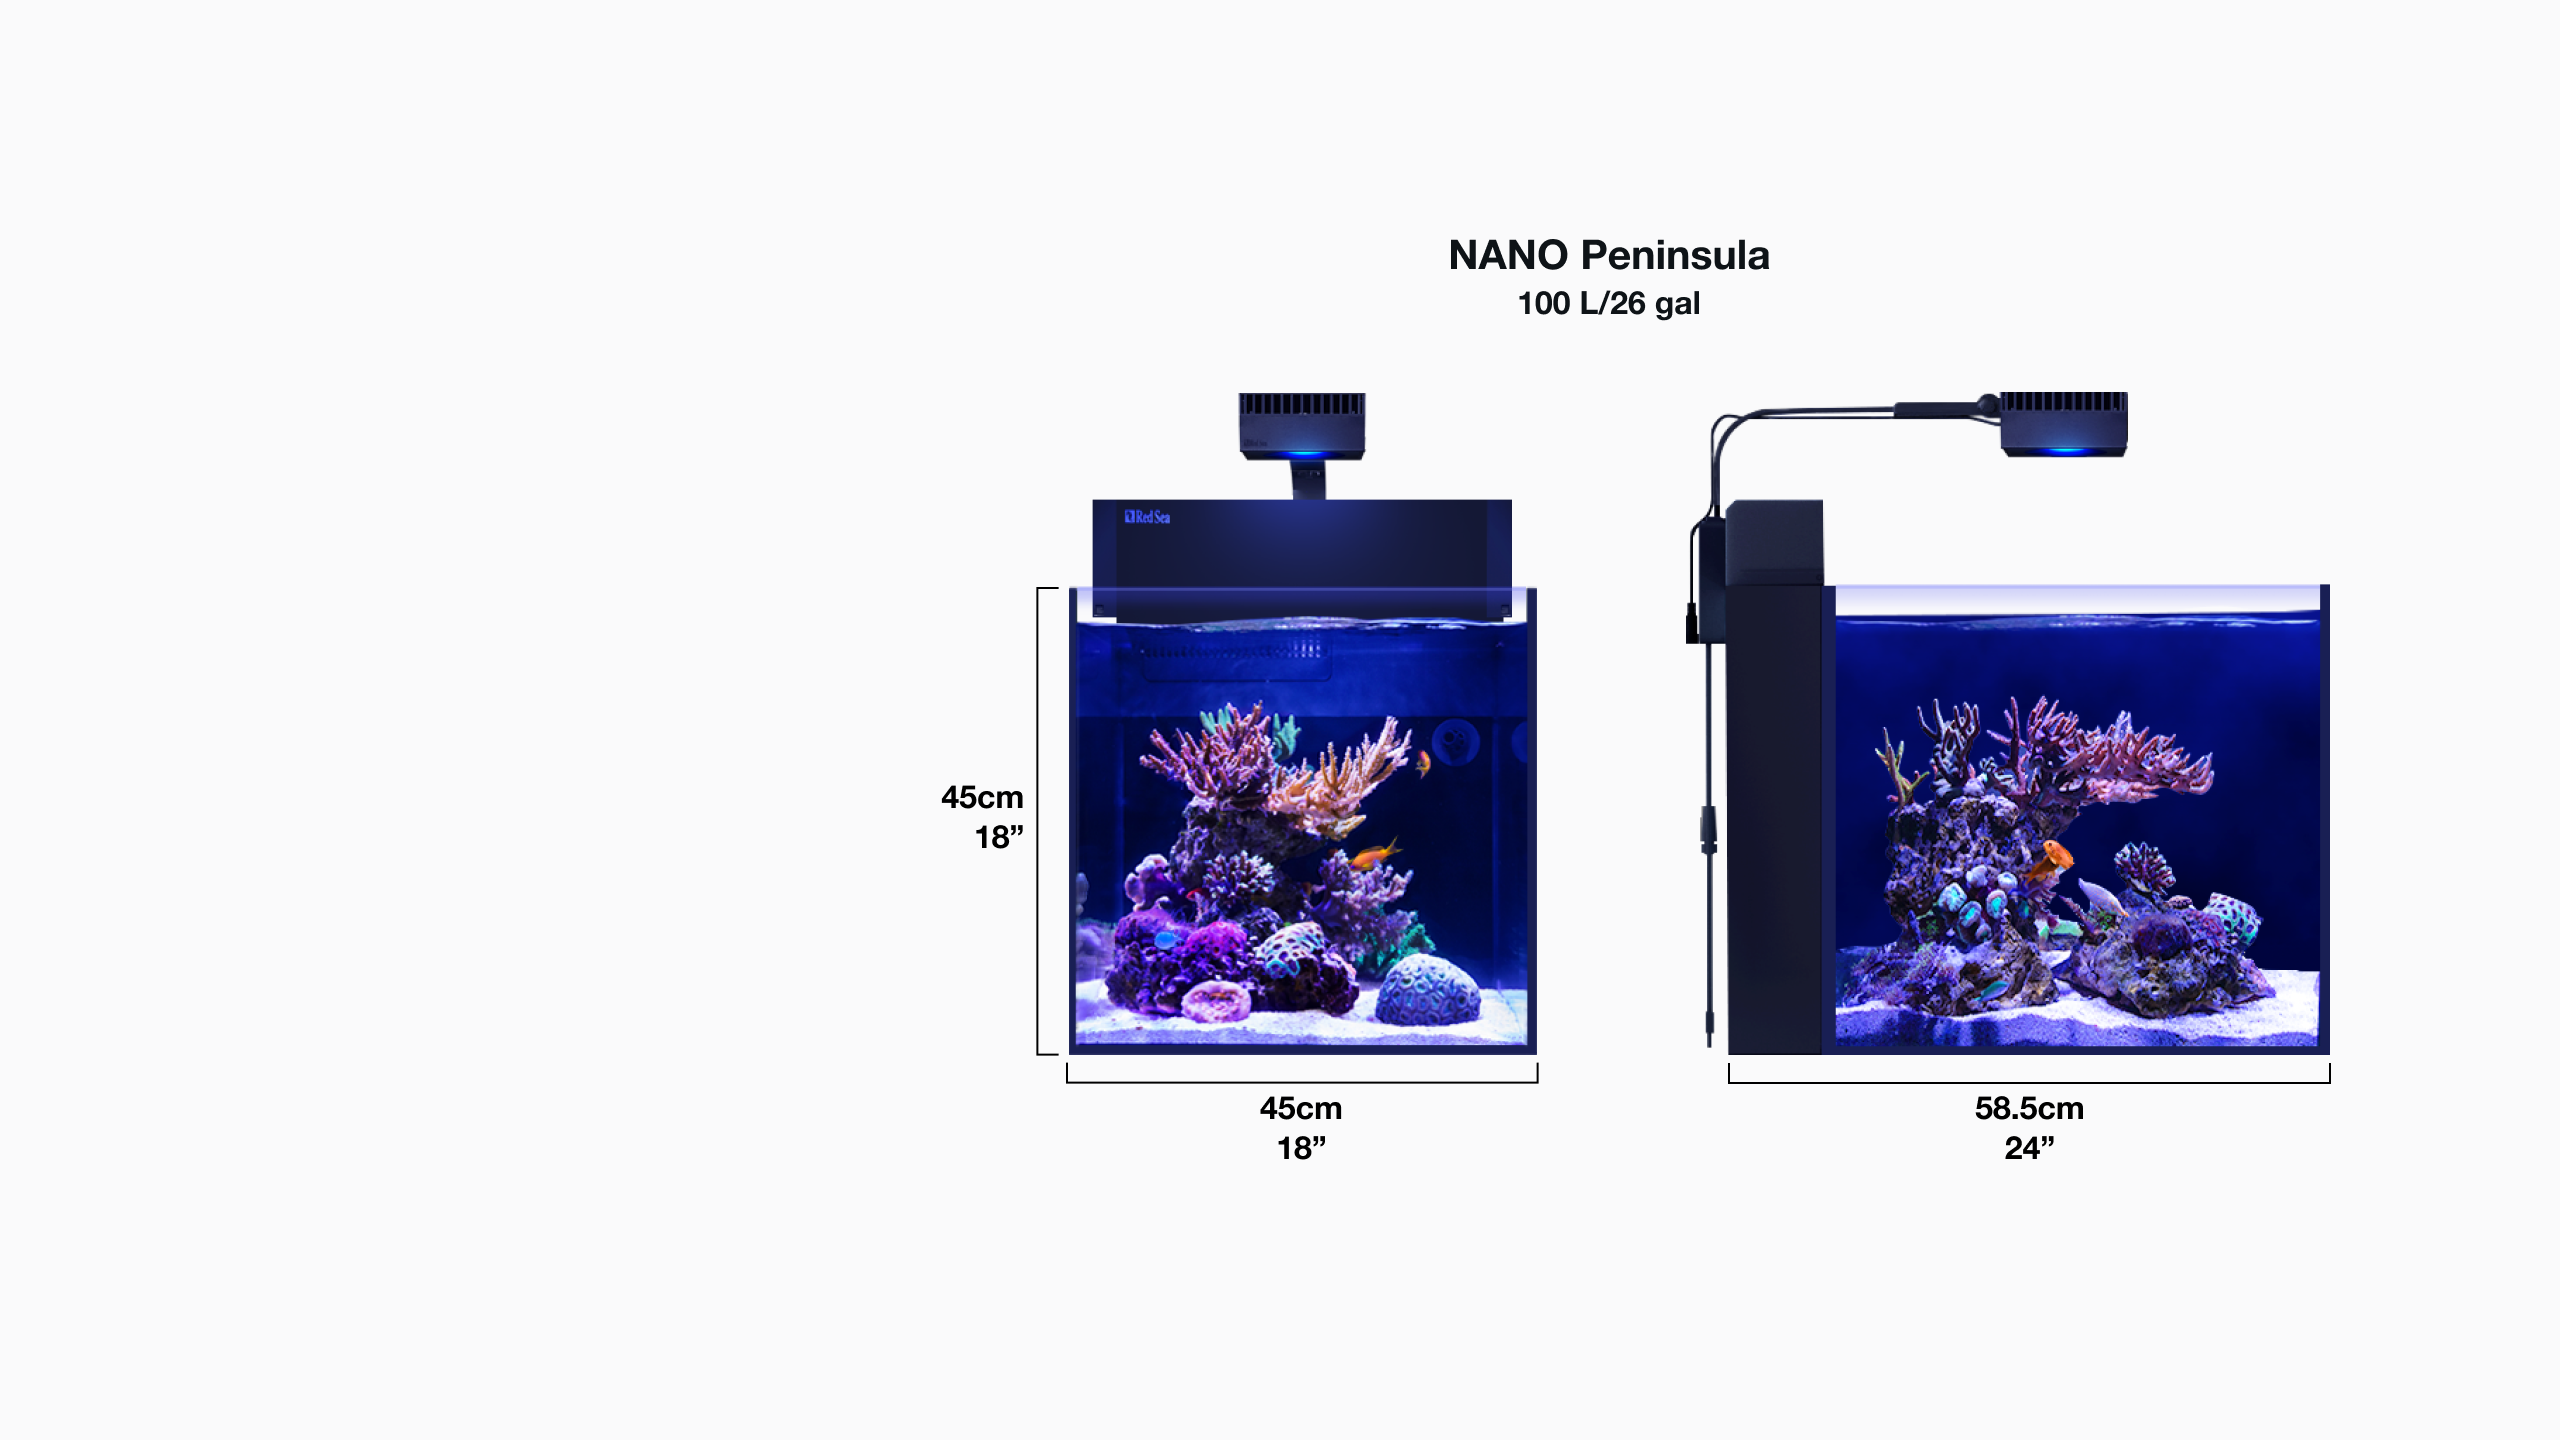 Red Sea Max NANO Peninsula Complete Reef System (26 Gal) - Black